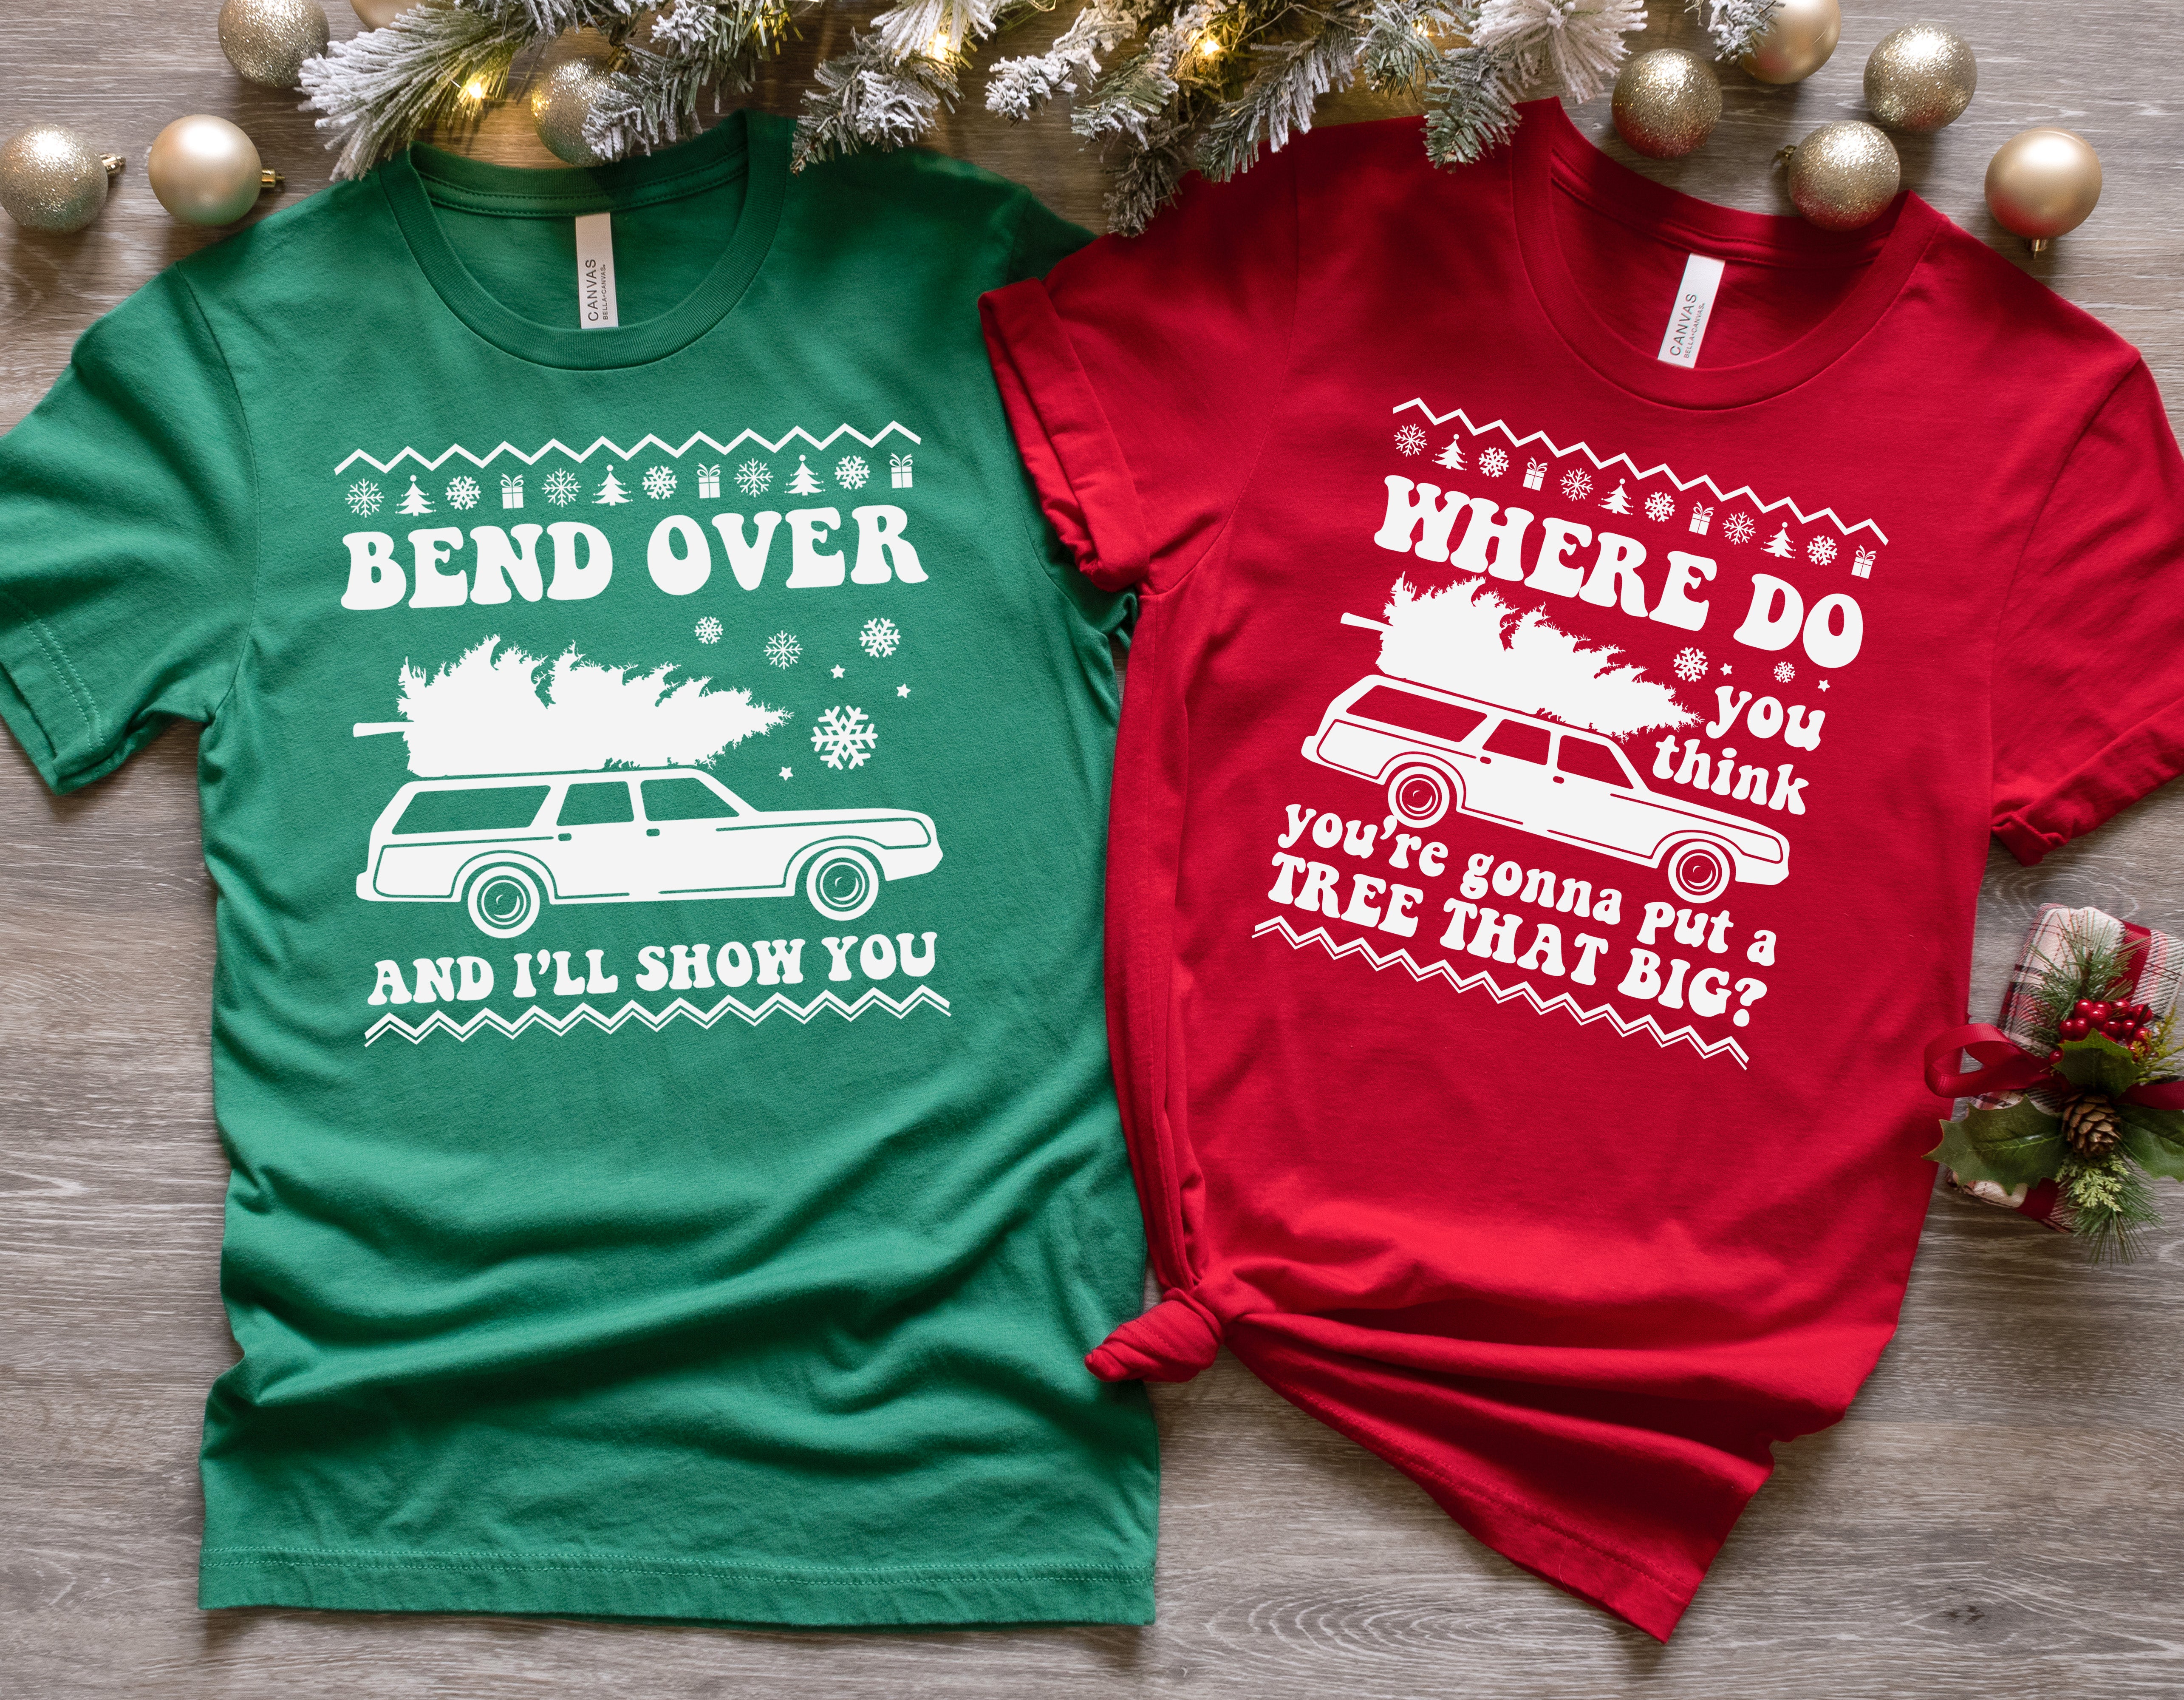 Where Do You Think You're Going To Put A Tree That Big Matching Christmas Shirt Set